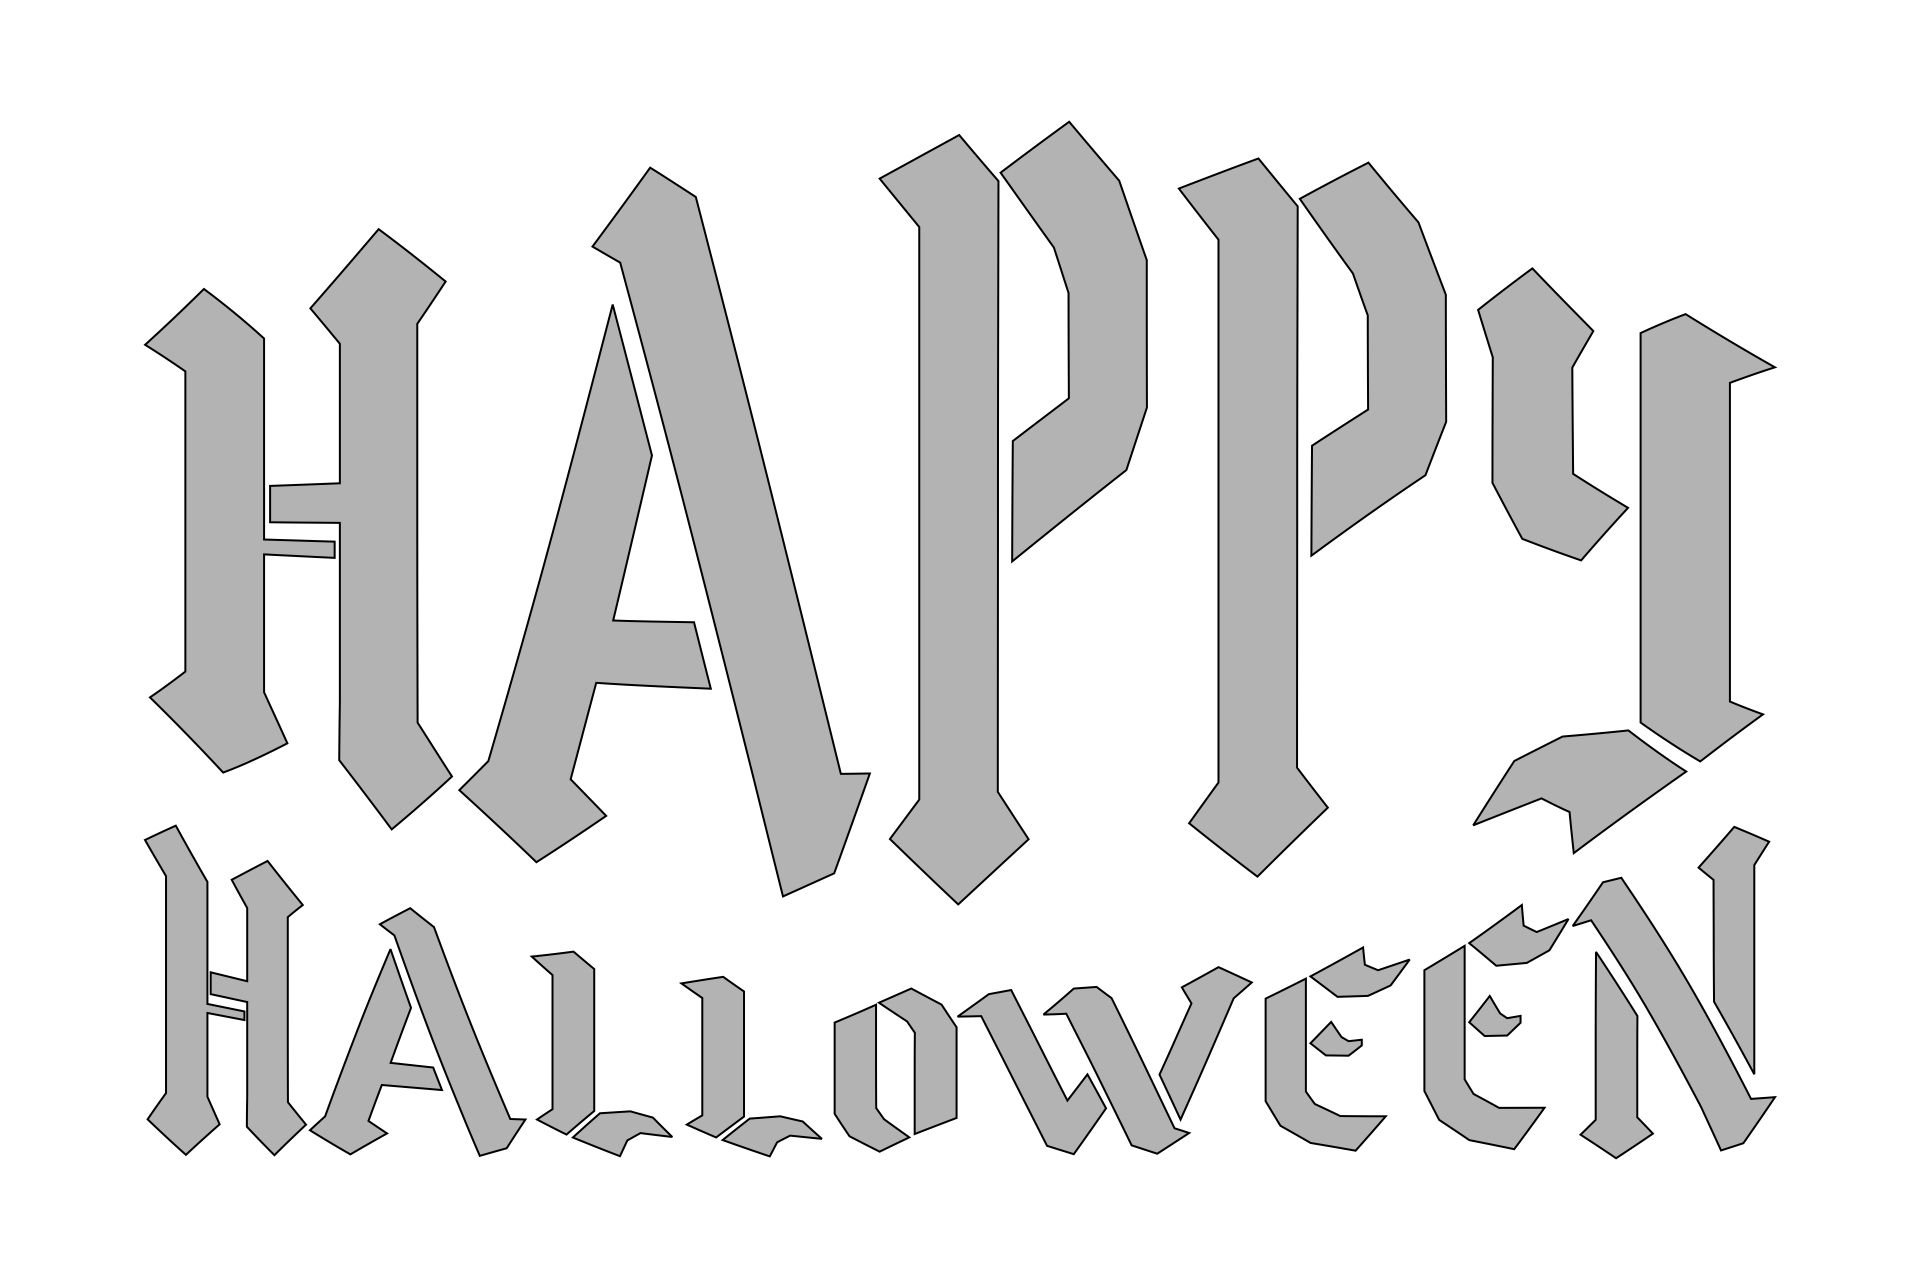 Free Printable Happy Halloween Pumpkin Stencils